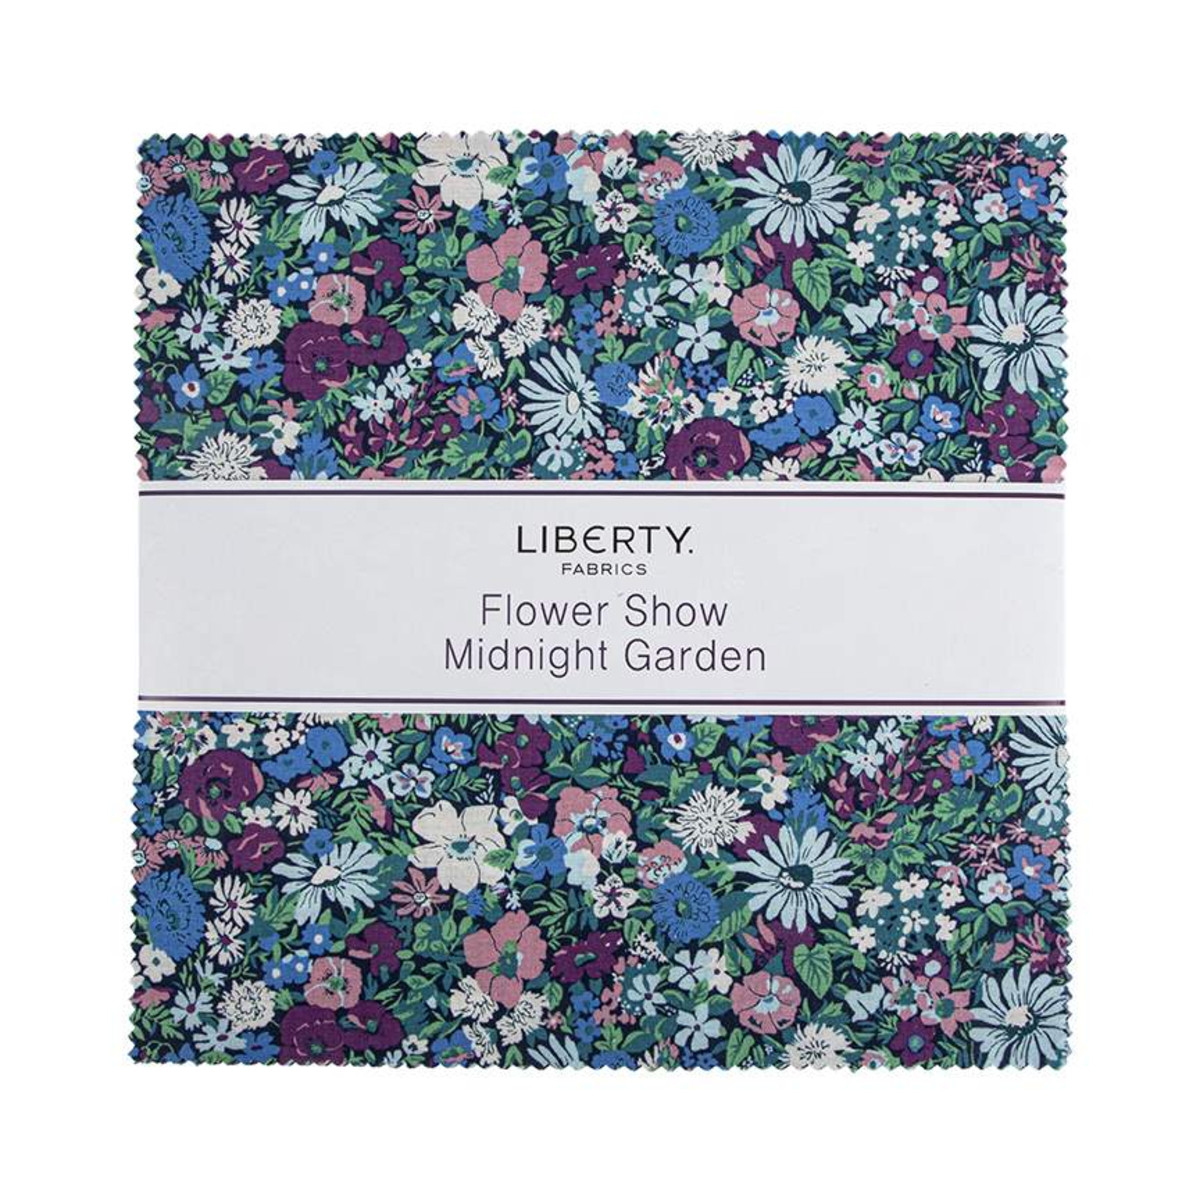 Riley Blake Layer Cake - Flower Show Midnight Garden by Liberty Fabrics